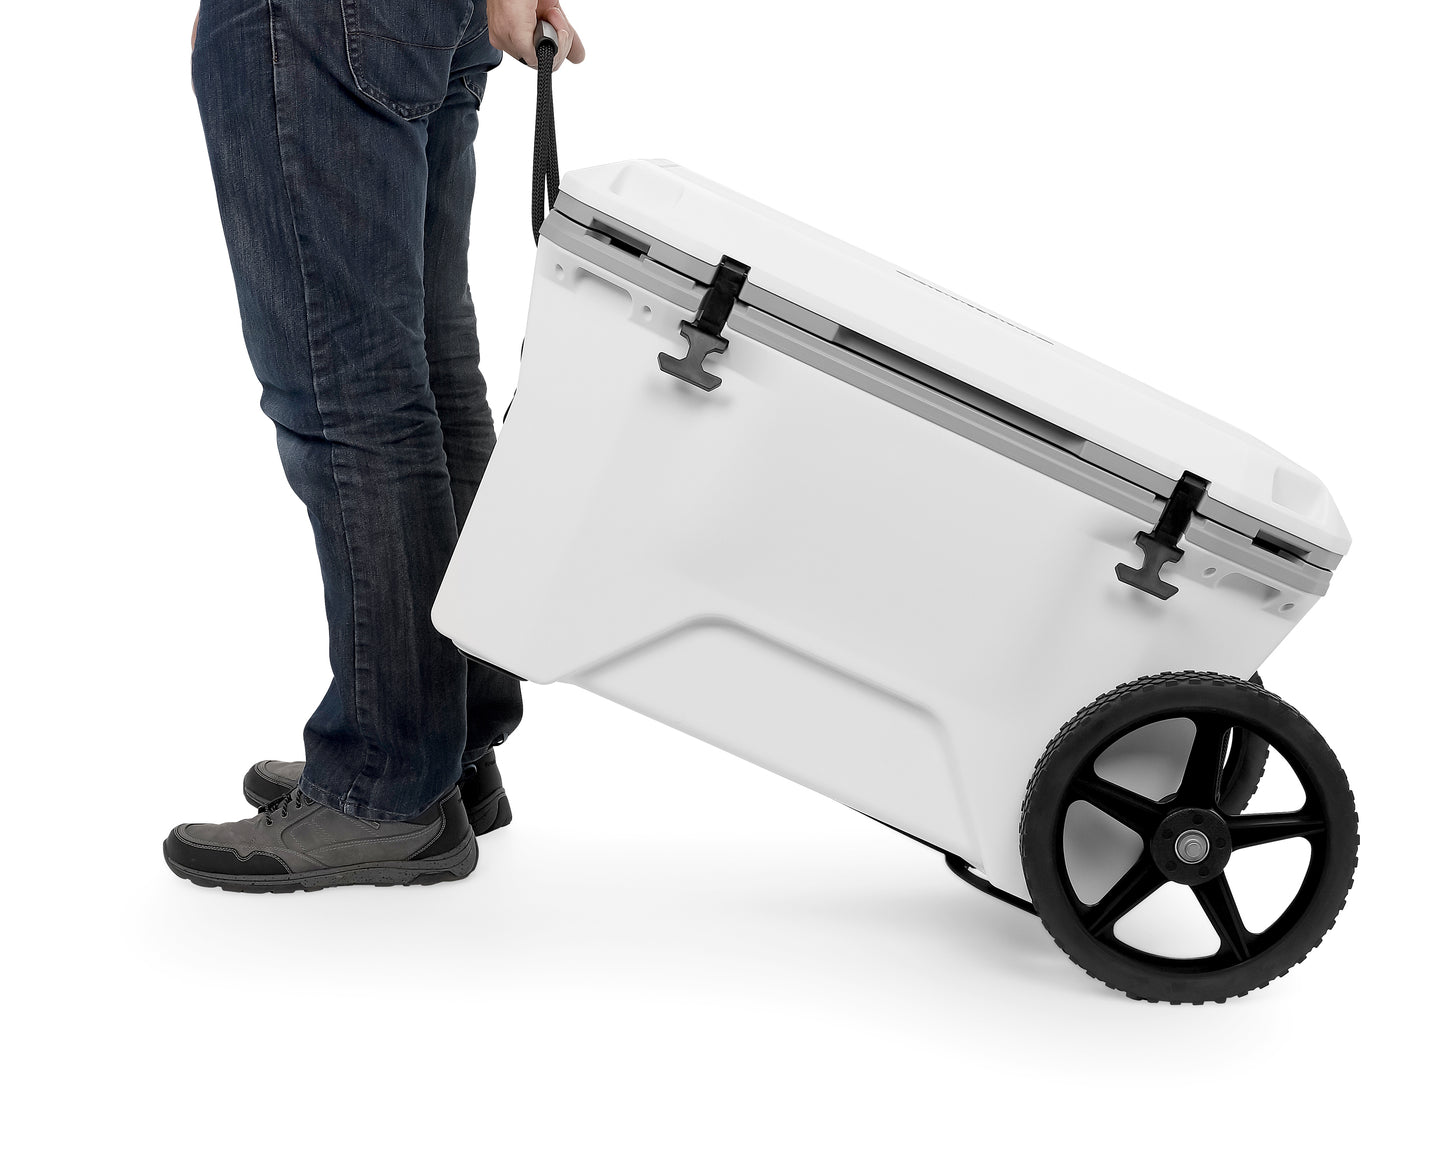 Kuuma Premium Cooler Cart